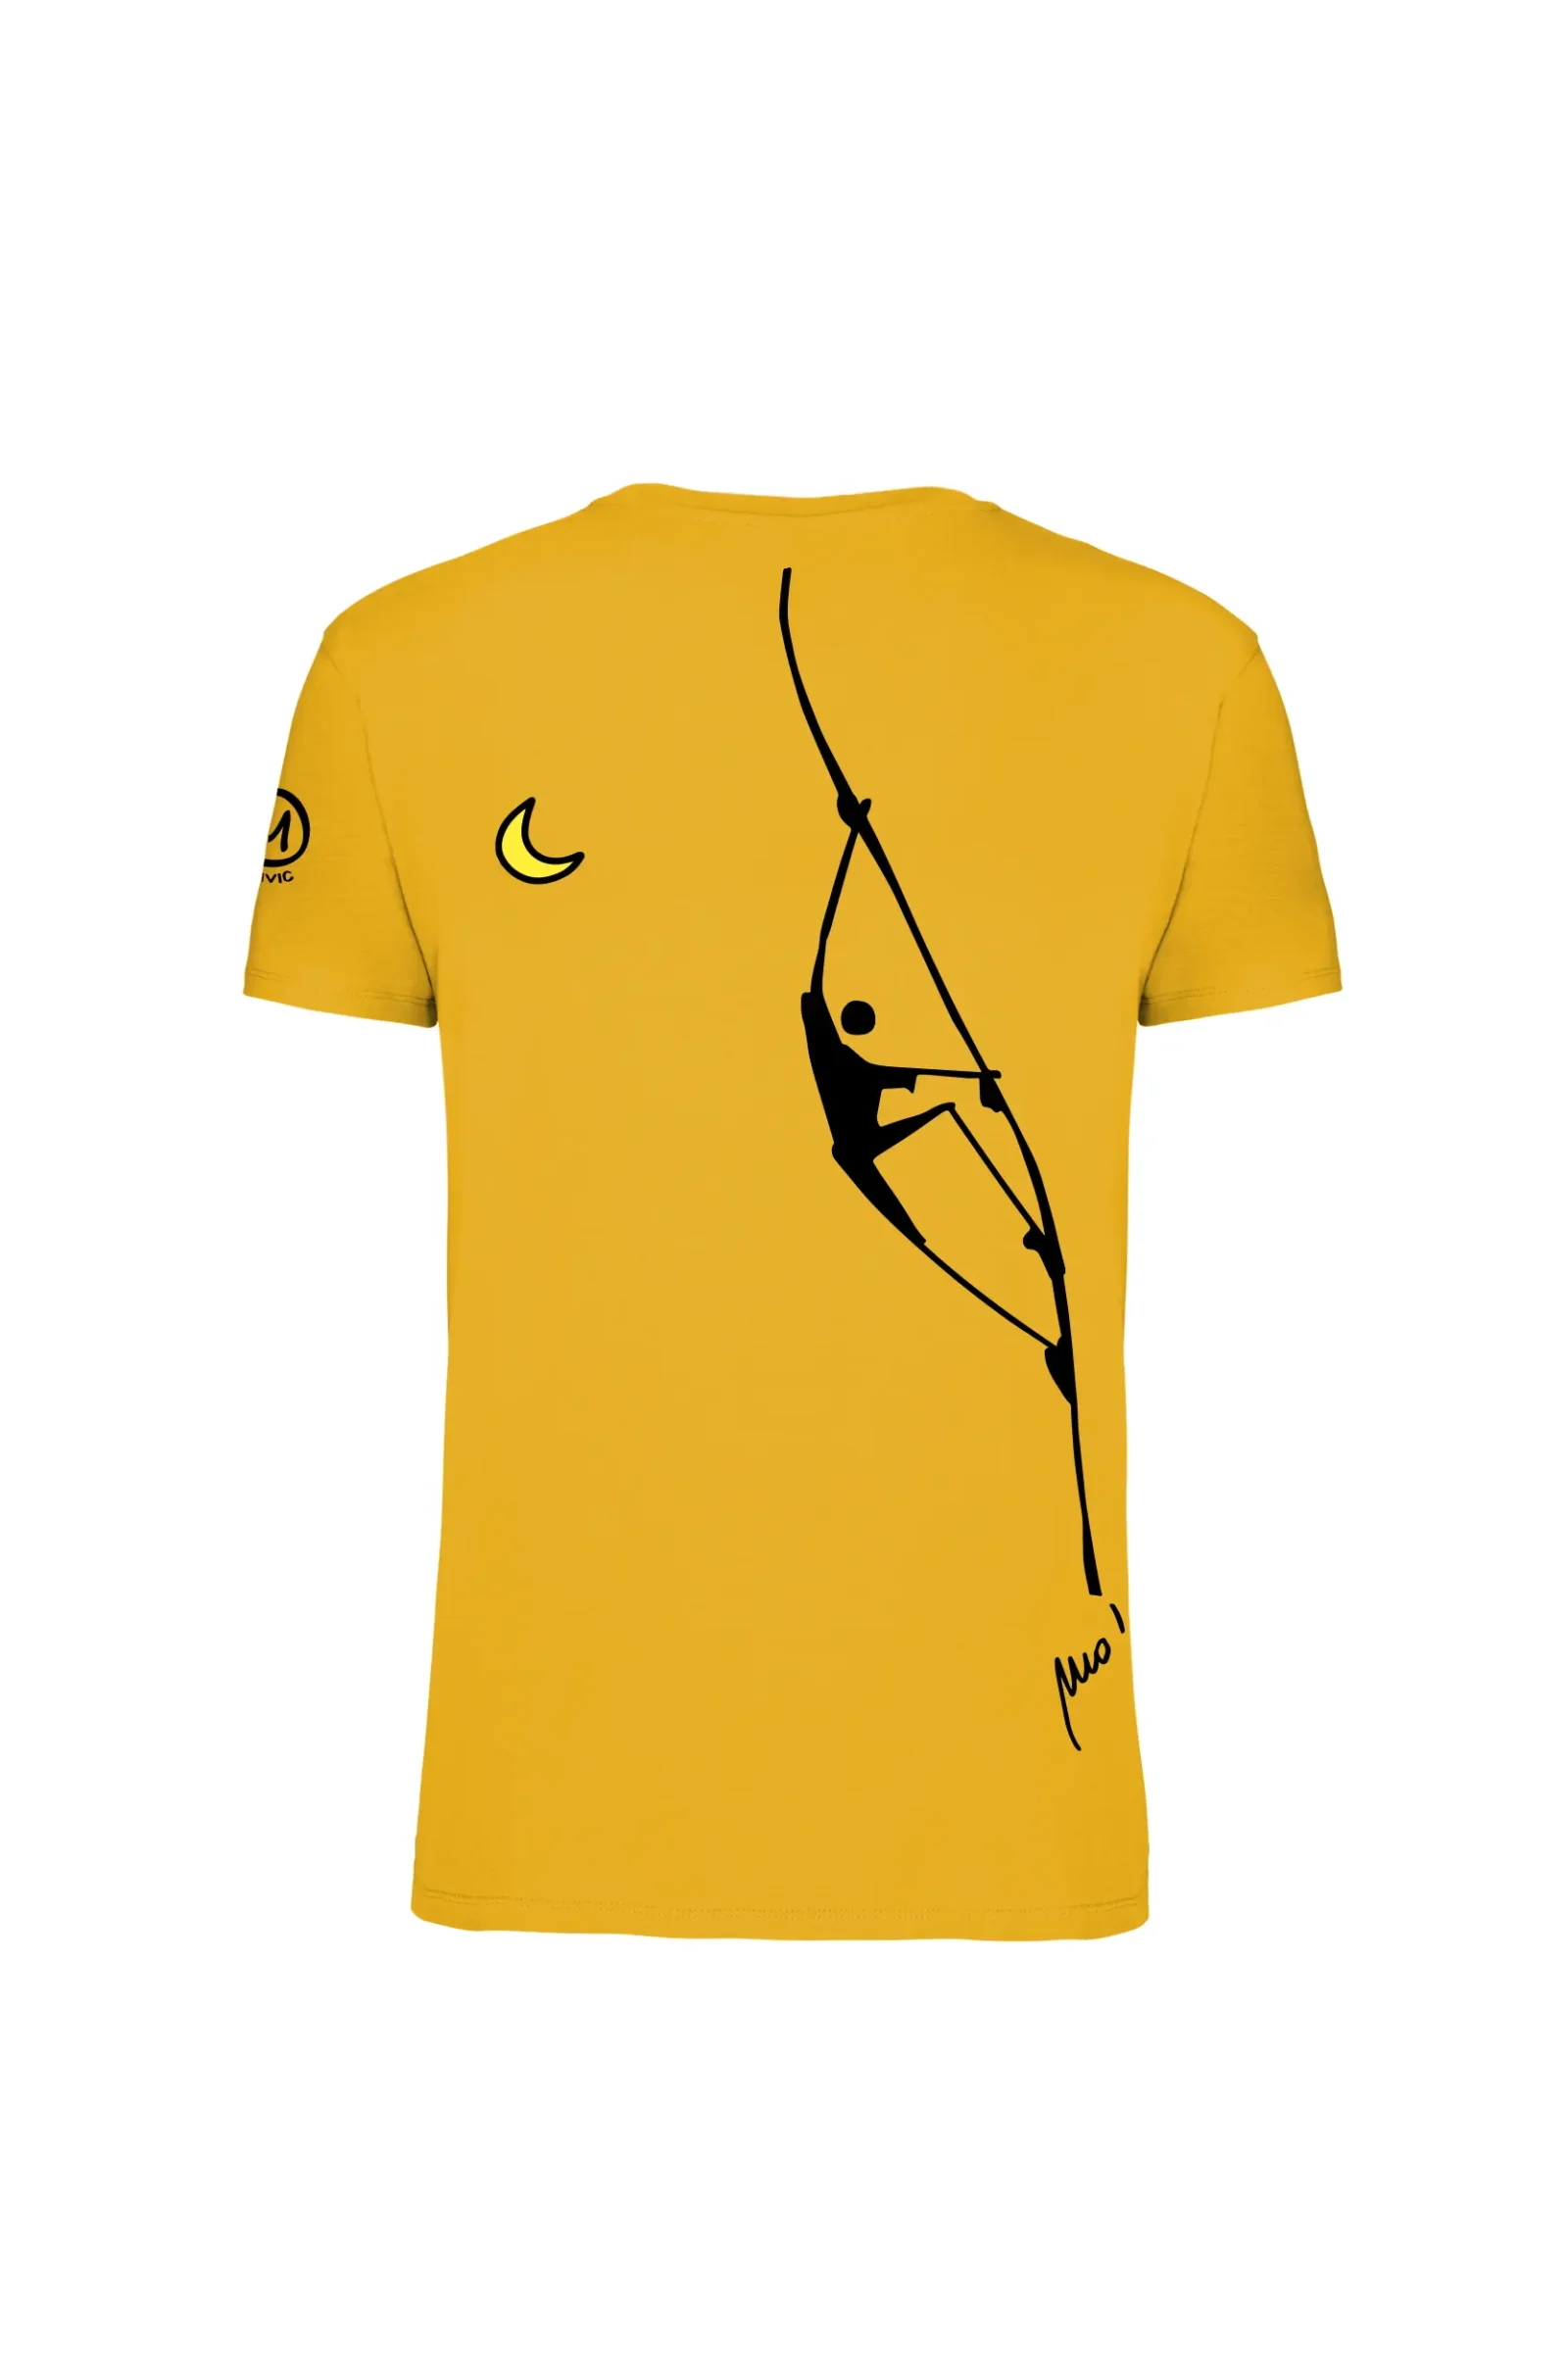 Men's t-shirt - yellow - "Teba" climbing graphics - Monvic HASH